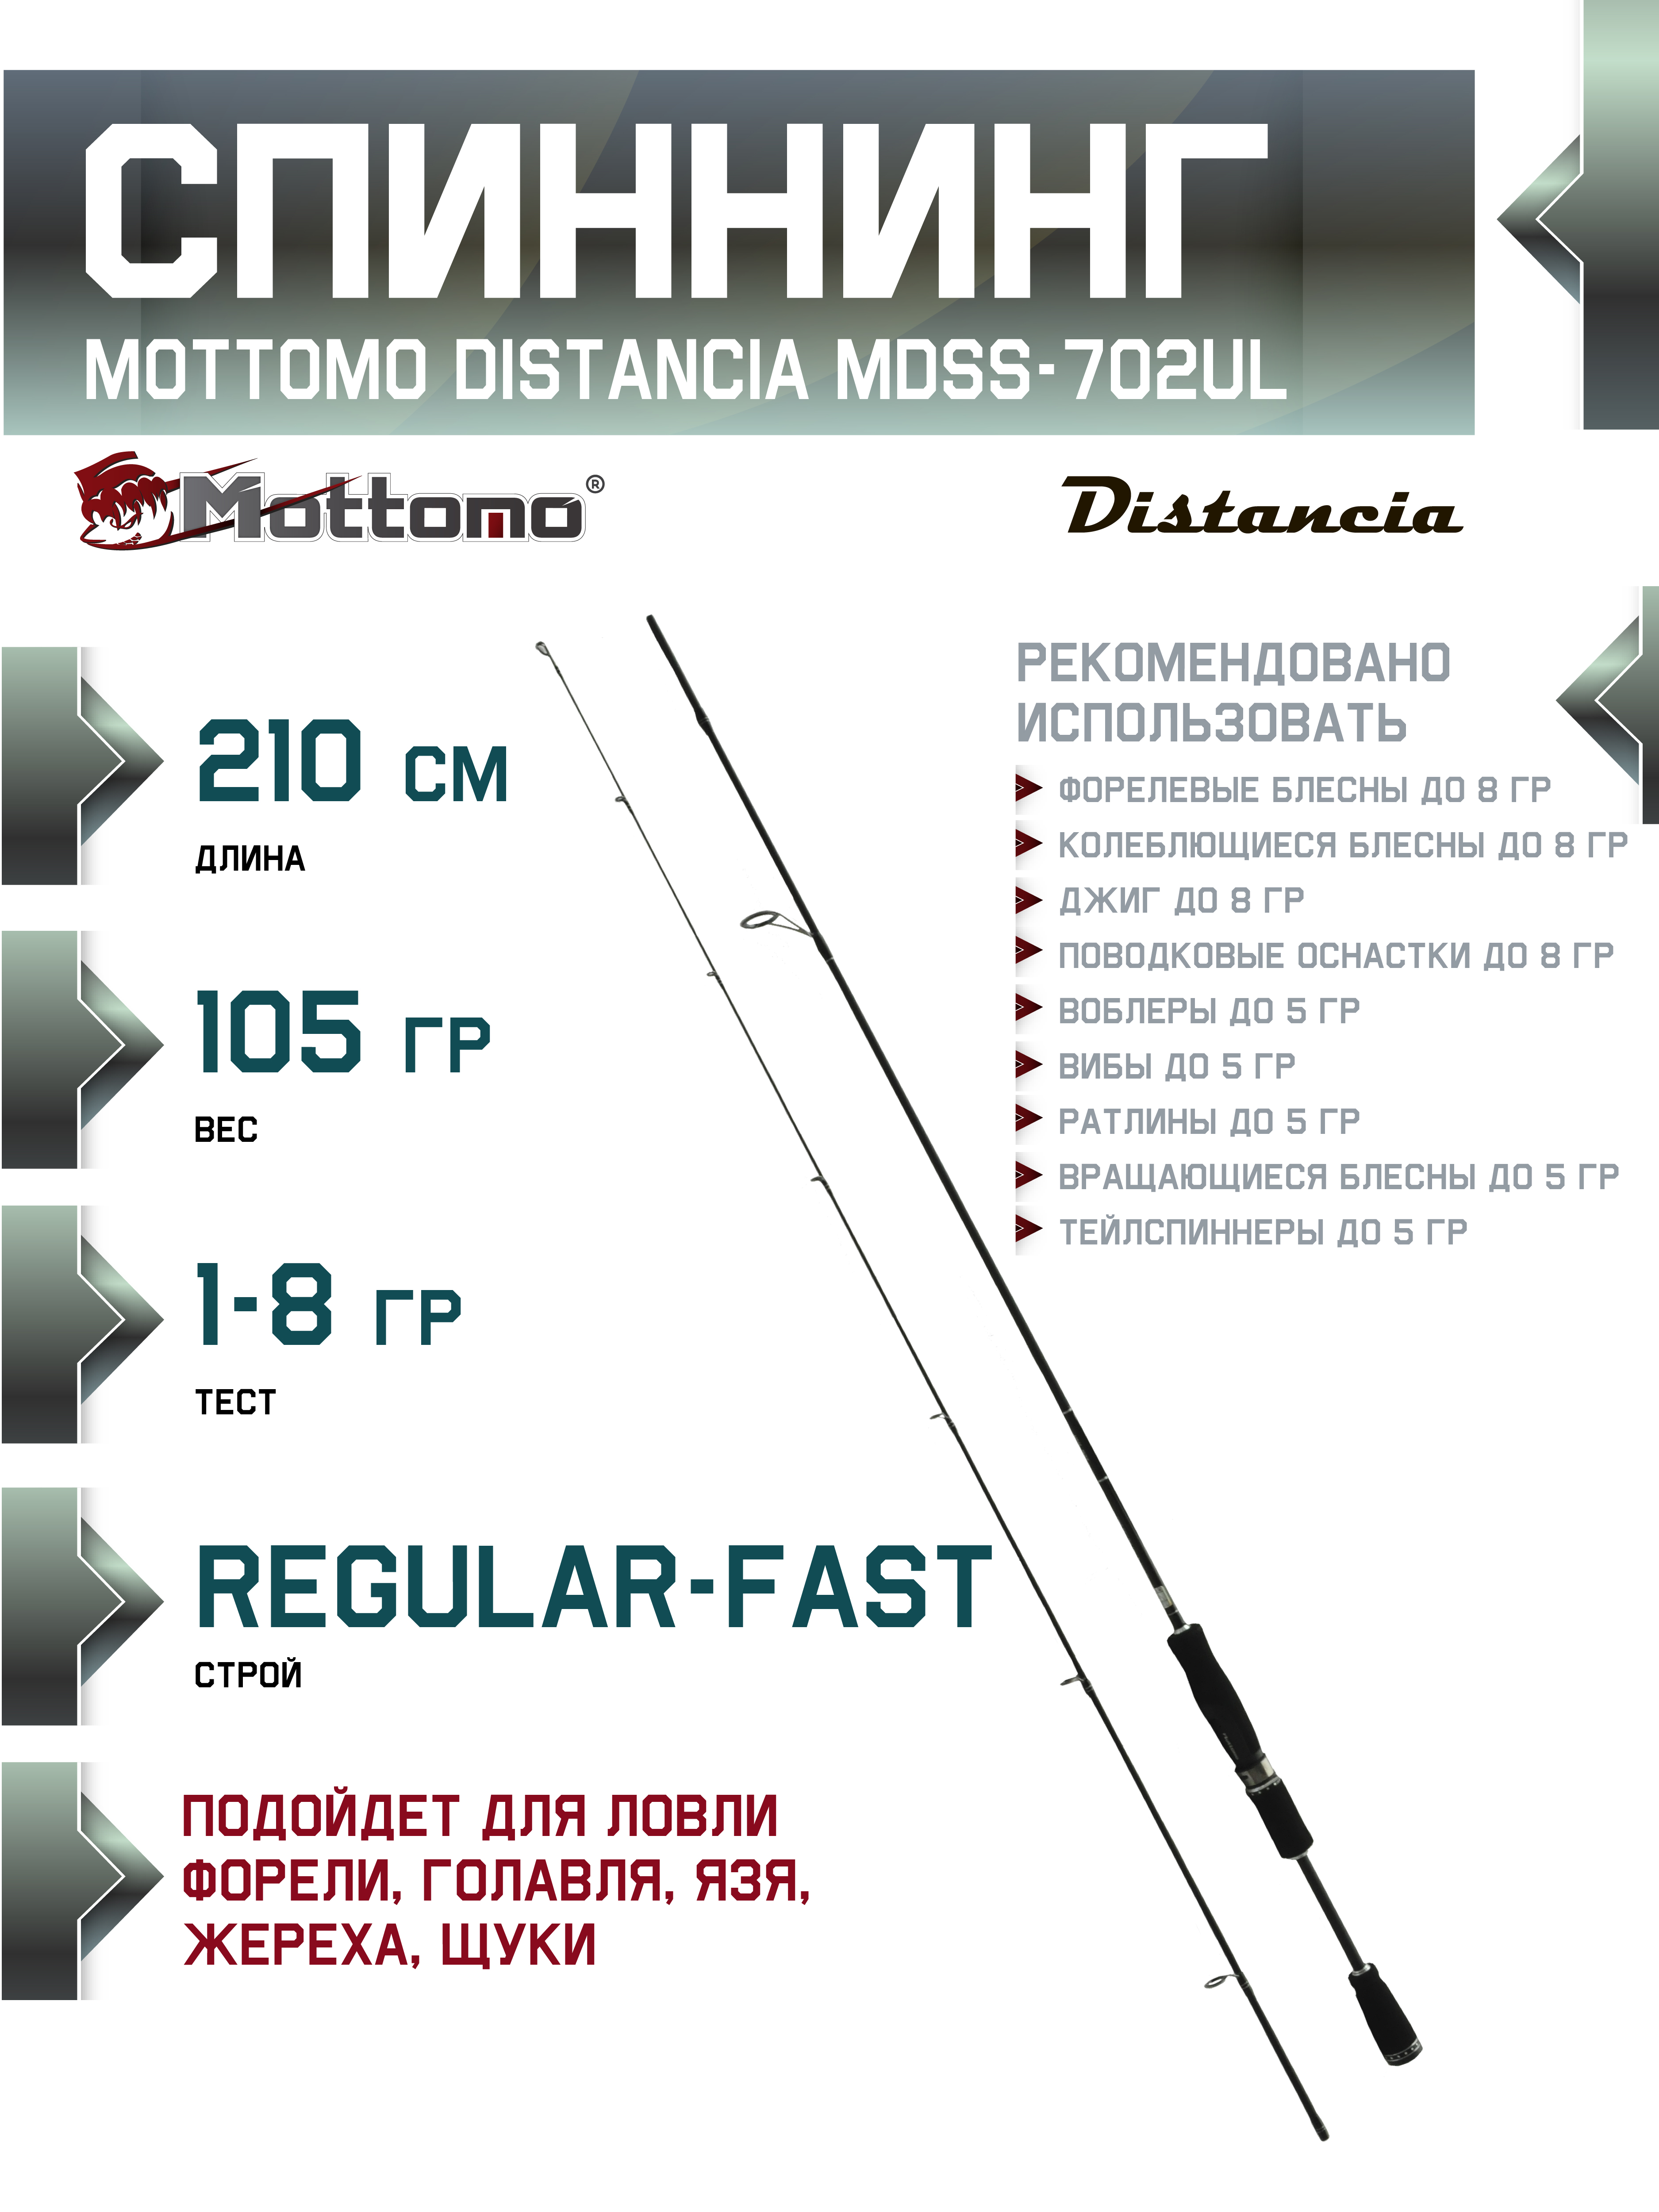 Спиннинг Mottomo Distancia MDSS-702UL 210см/1-8g